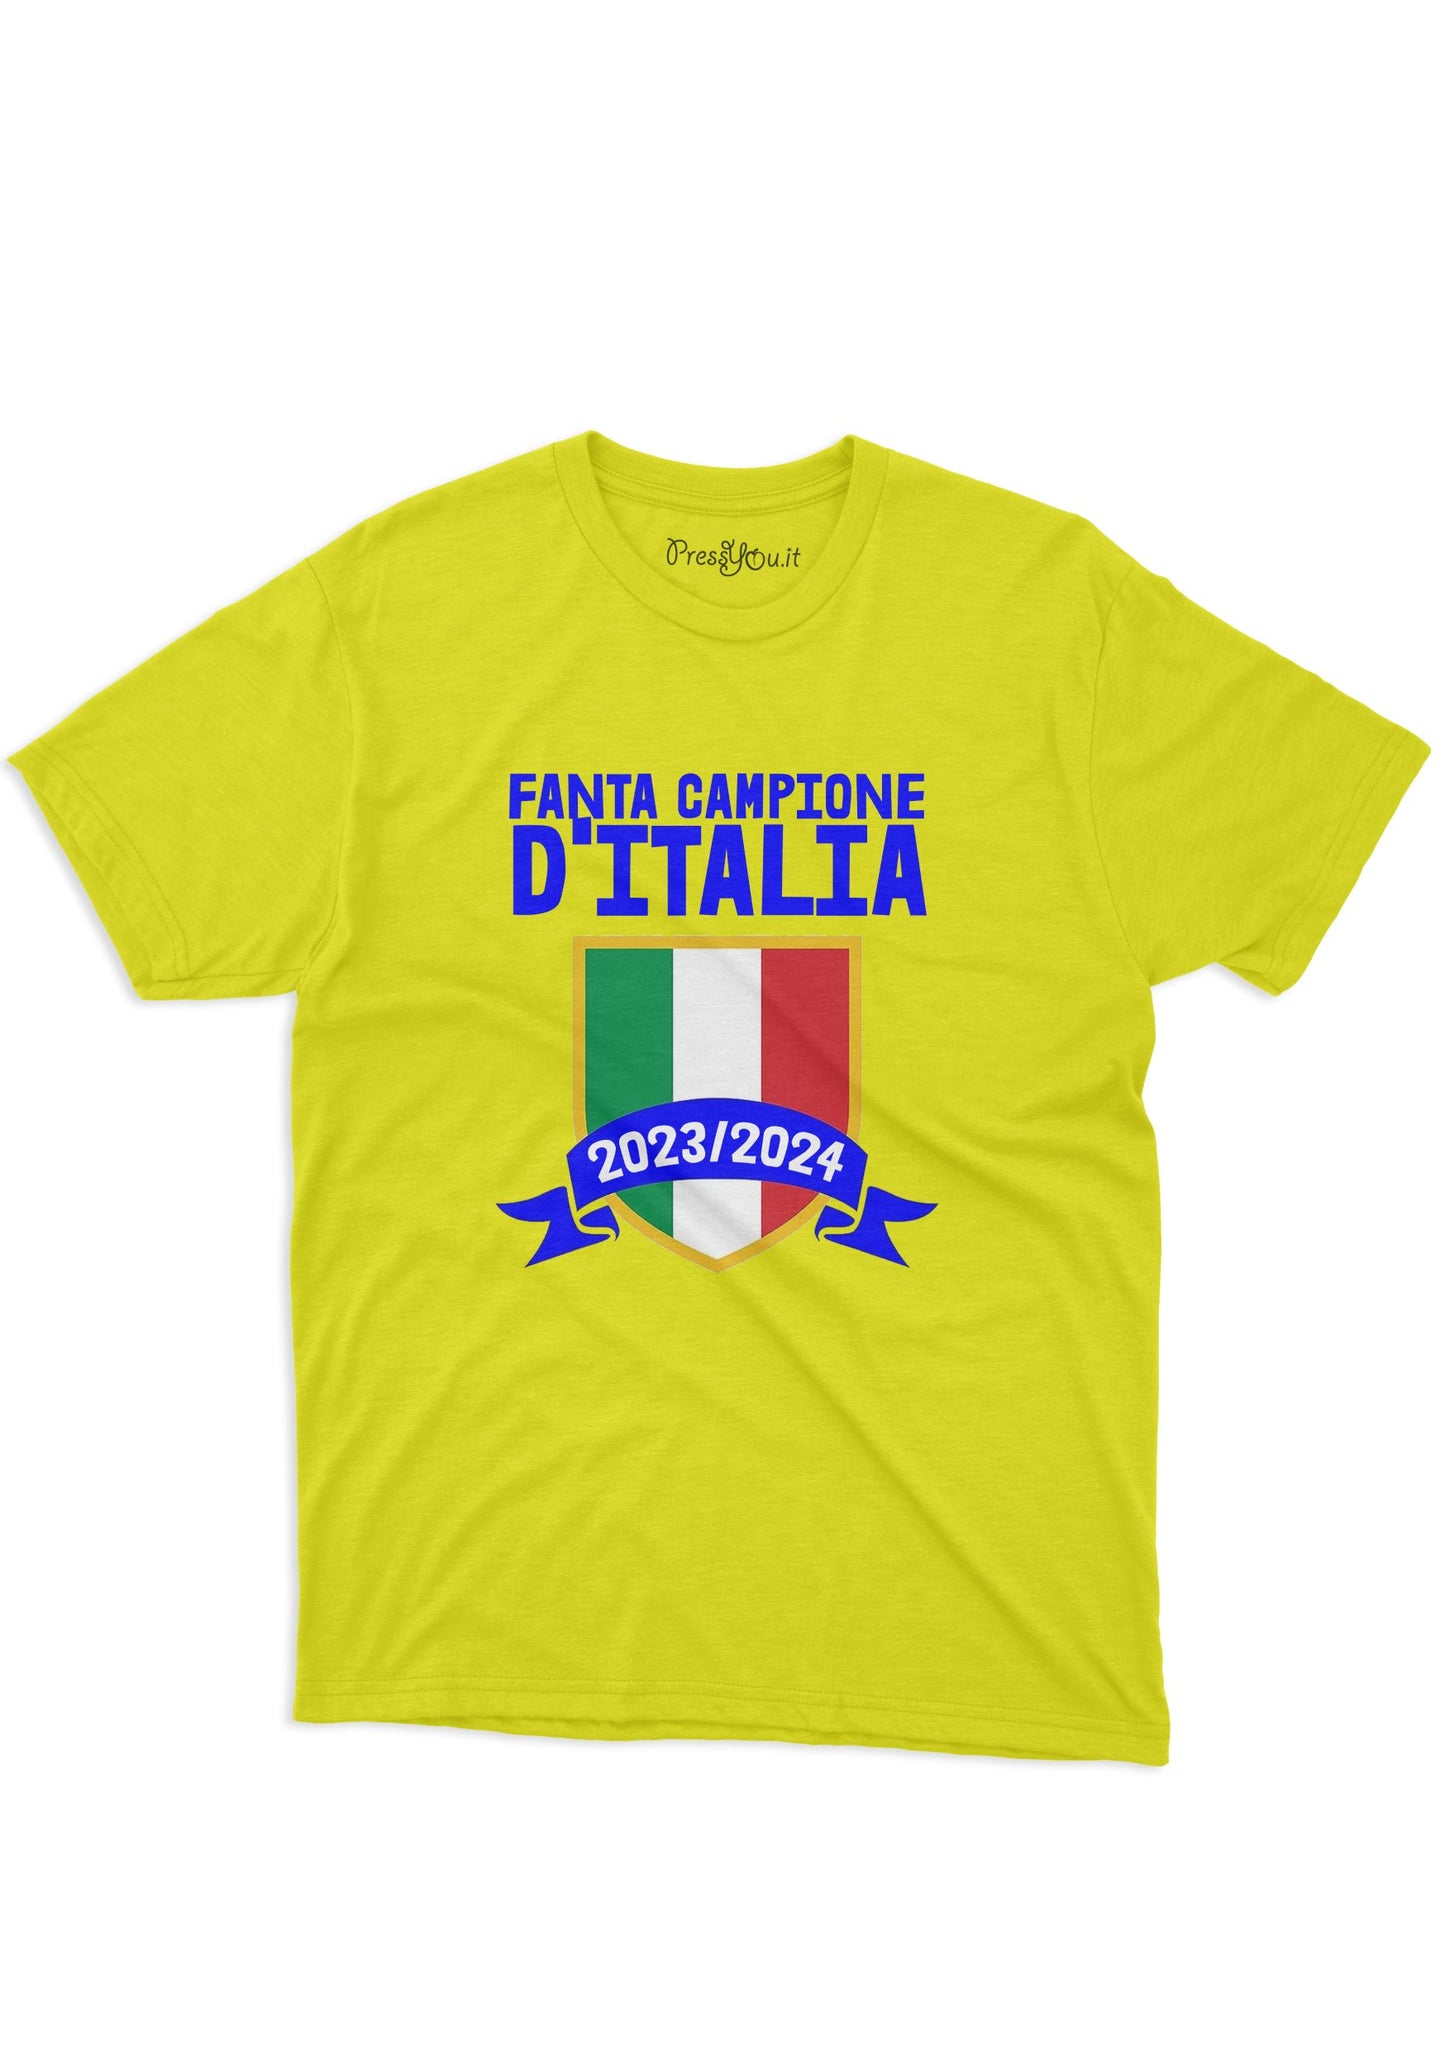 t-shirt - fantasy football fantasy champion of Italy 2023 2024 owl superstition funny gift idea